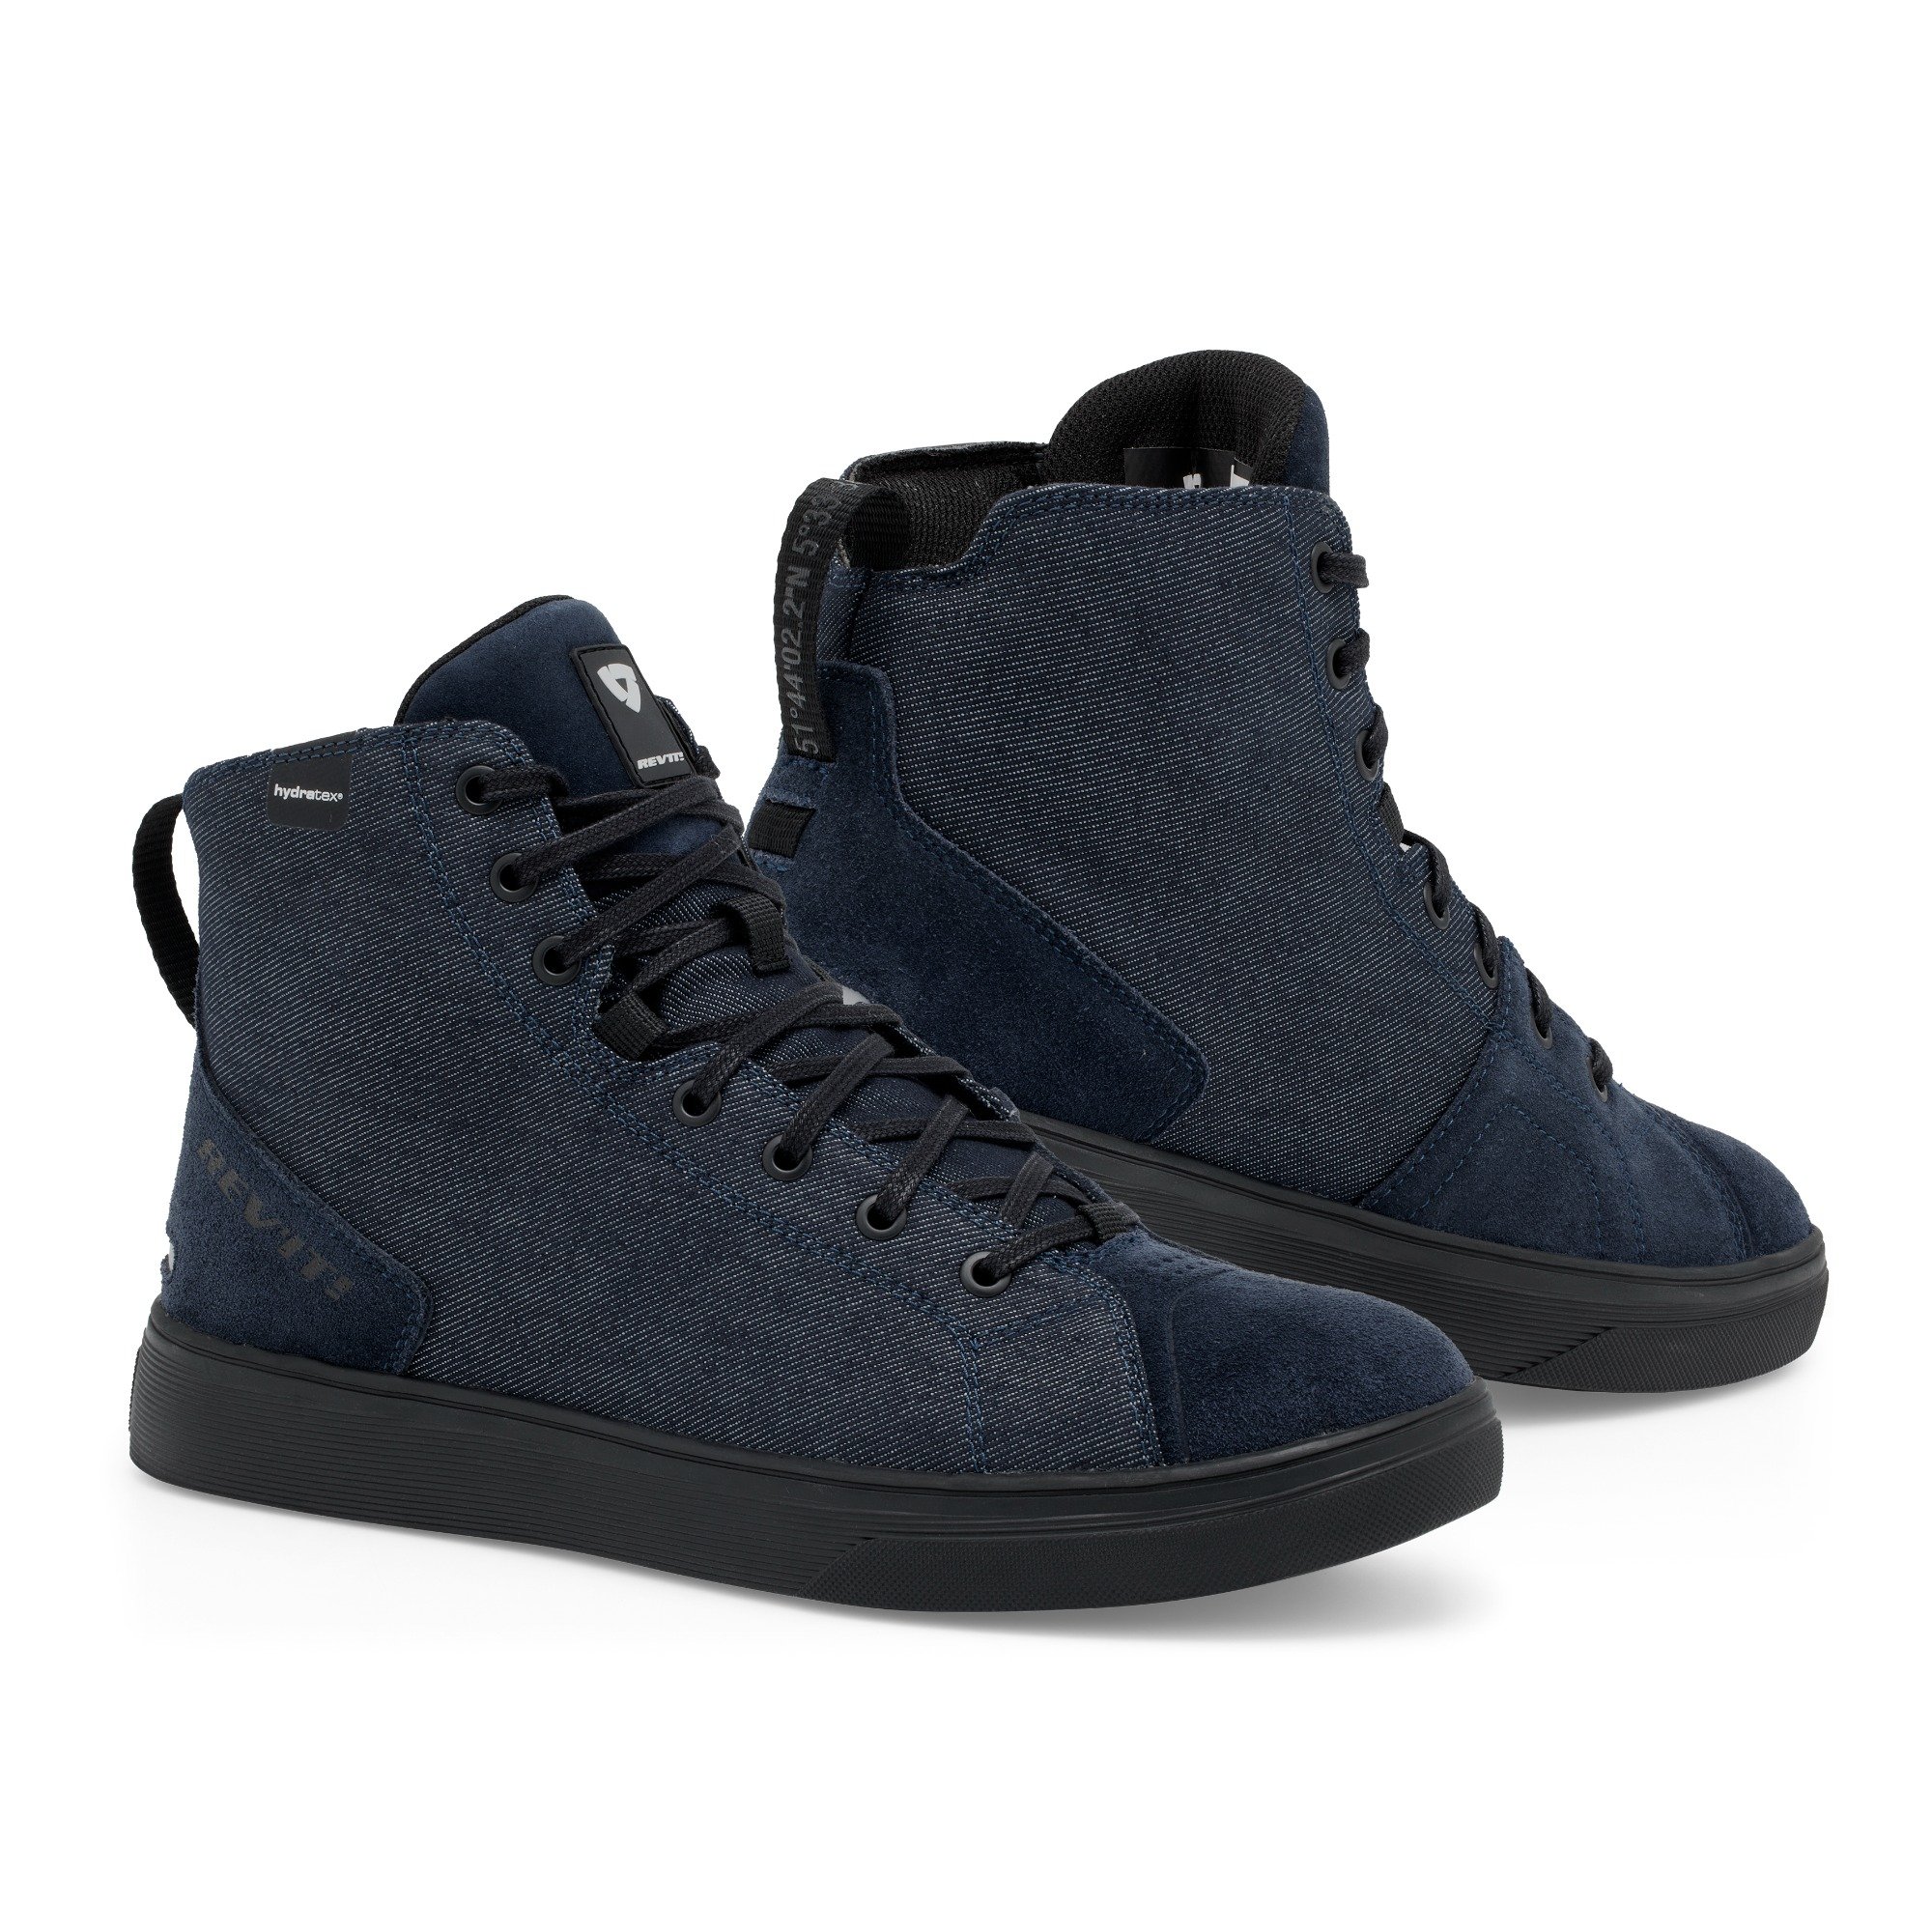 Image of REV'IT! Delta H2O Shoes Dark Blue Black Size 46 ID 8700001356497